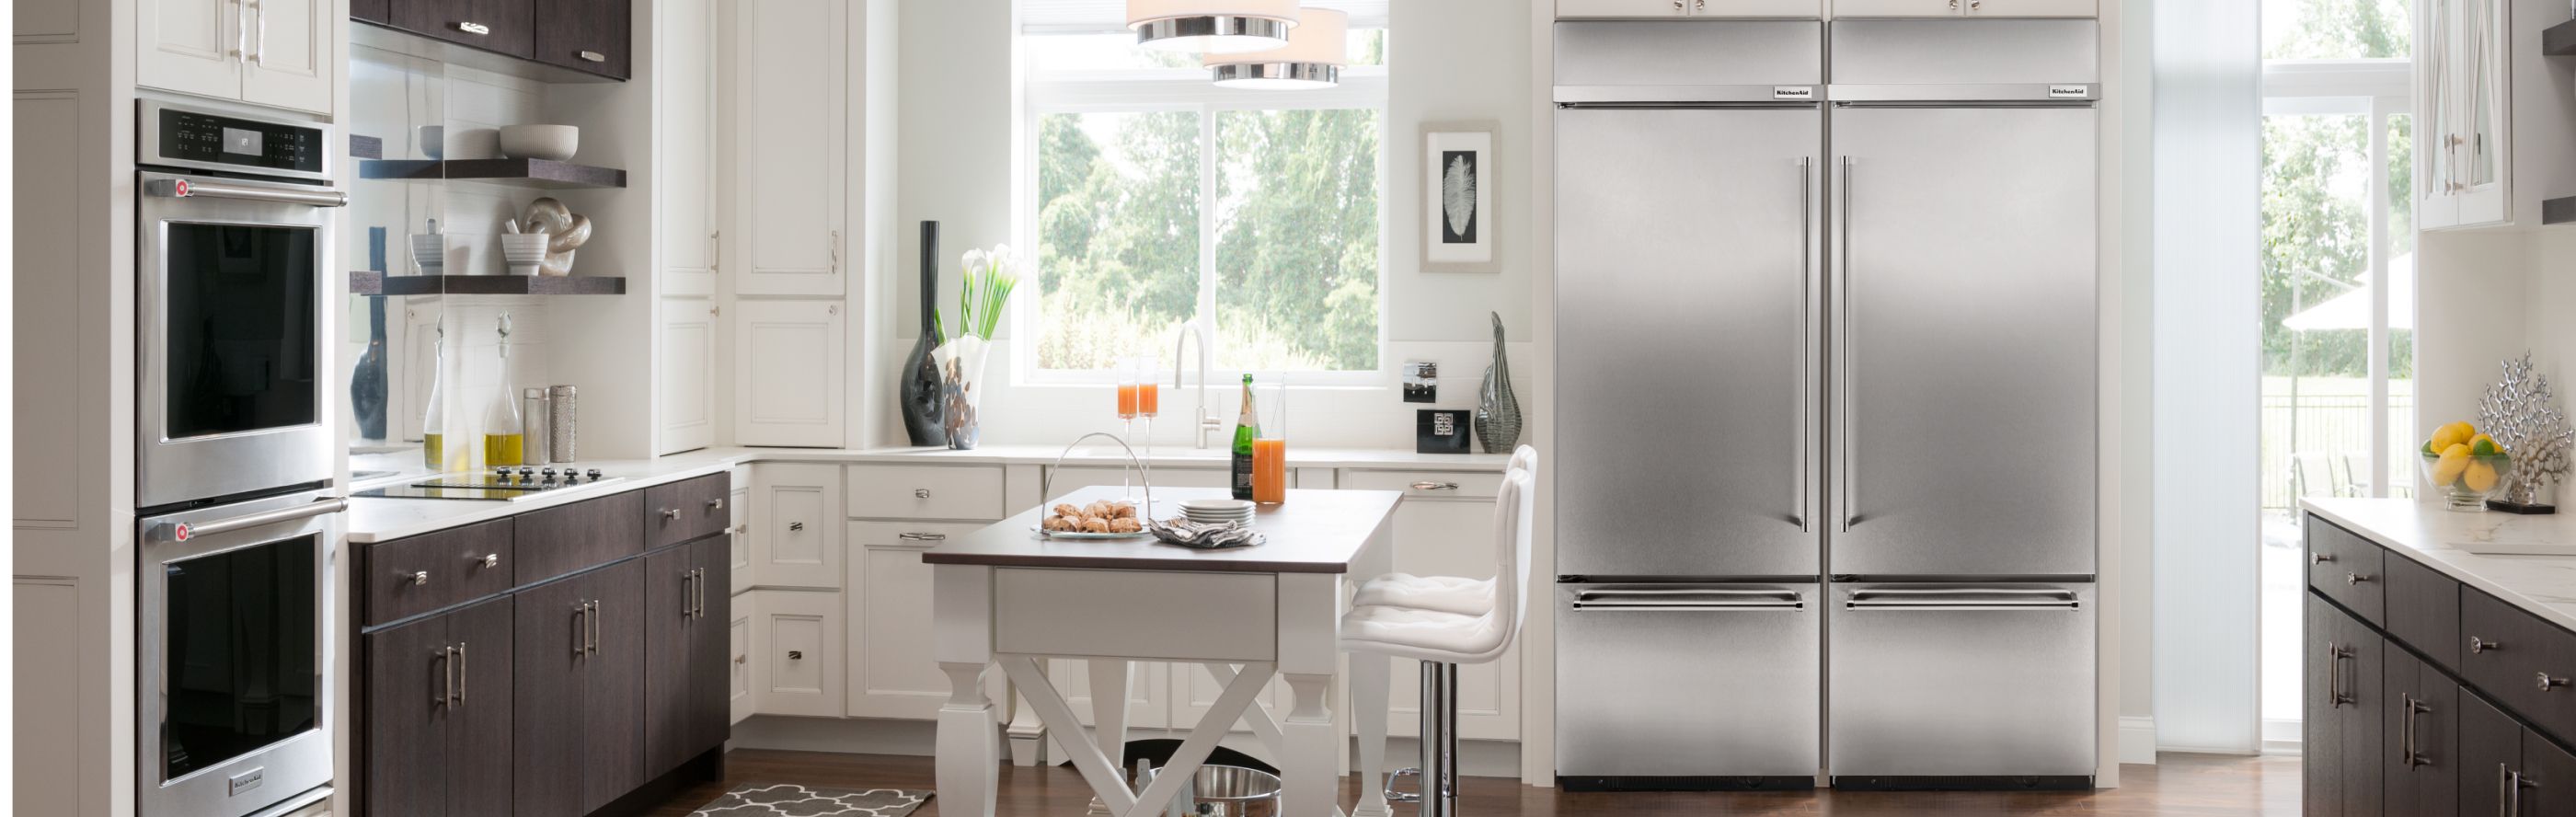 Stainless steel KitchenAid® french door refrigerator built into a modern kitchen